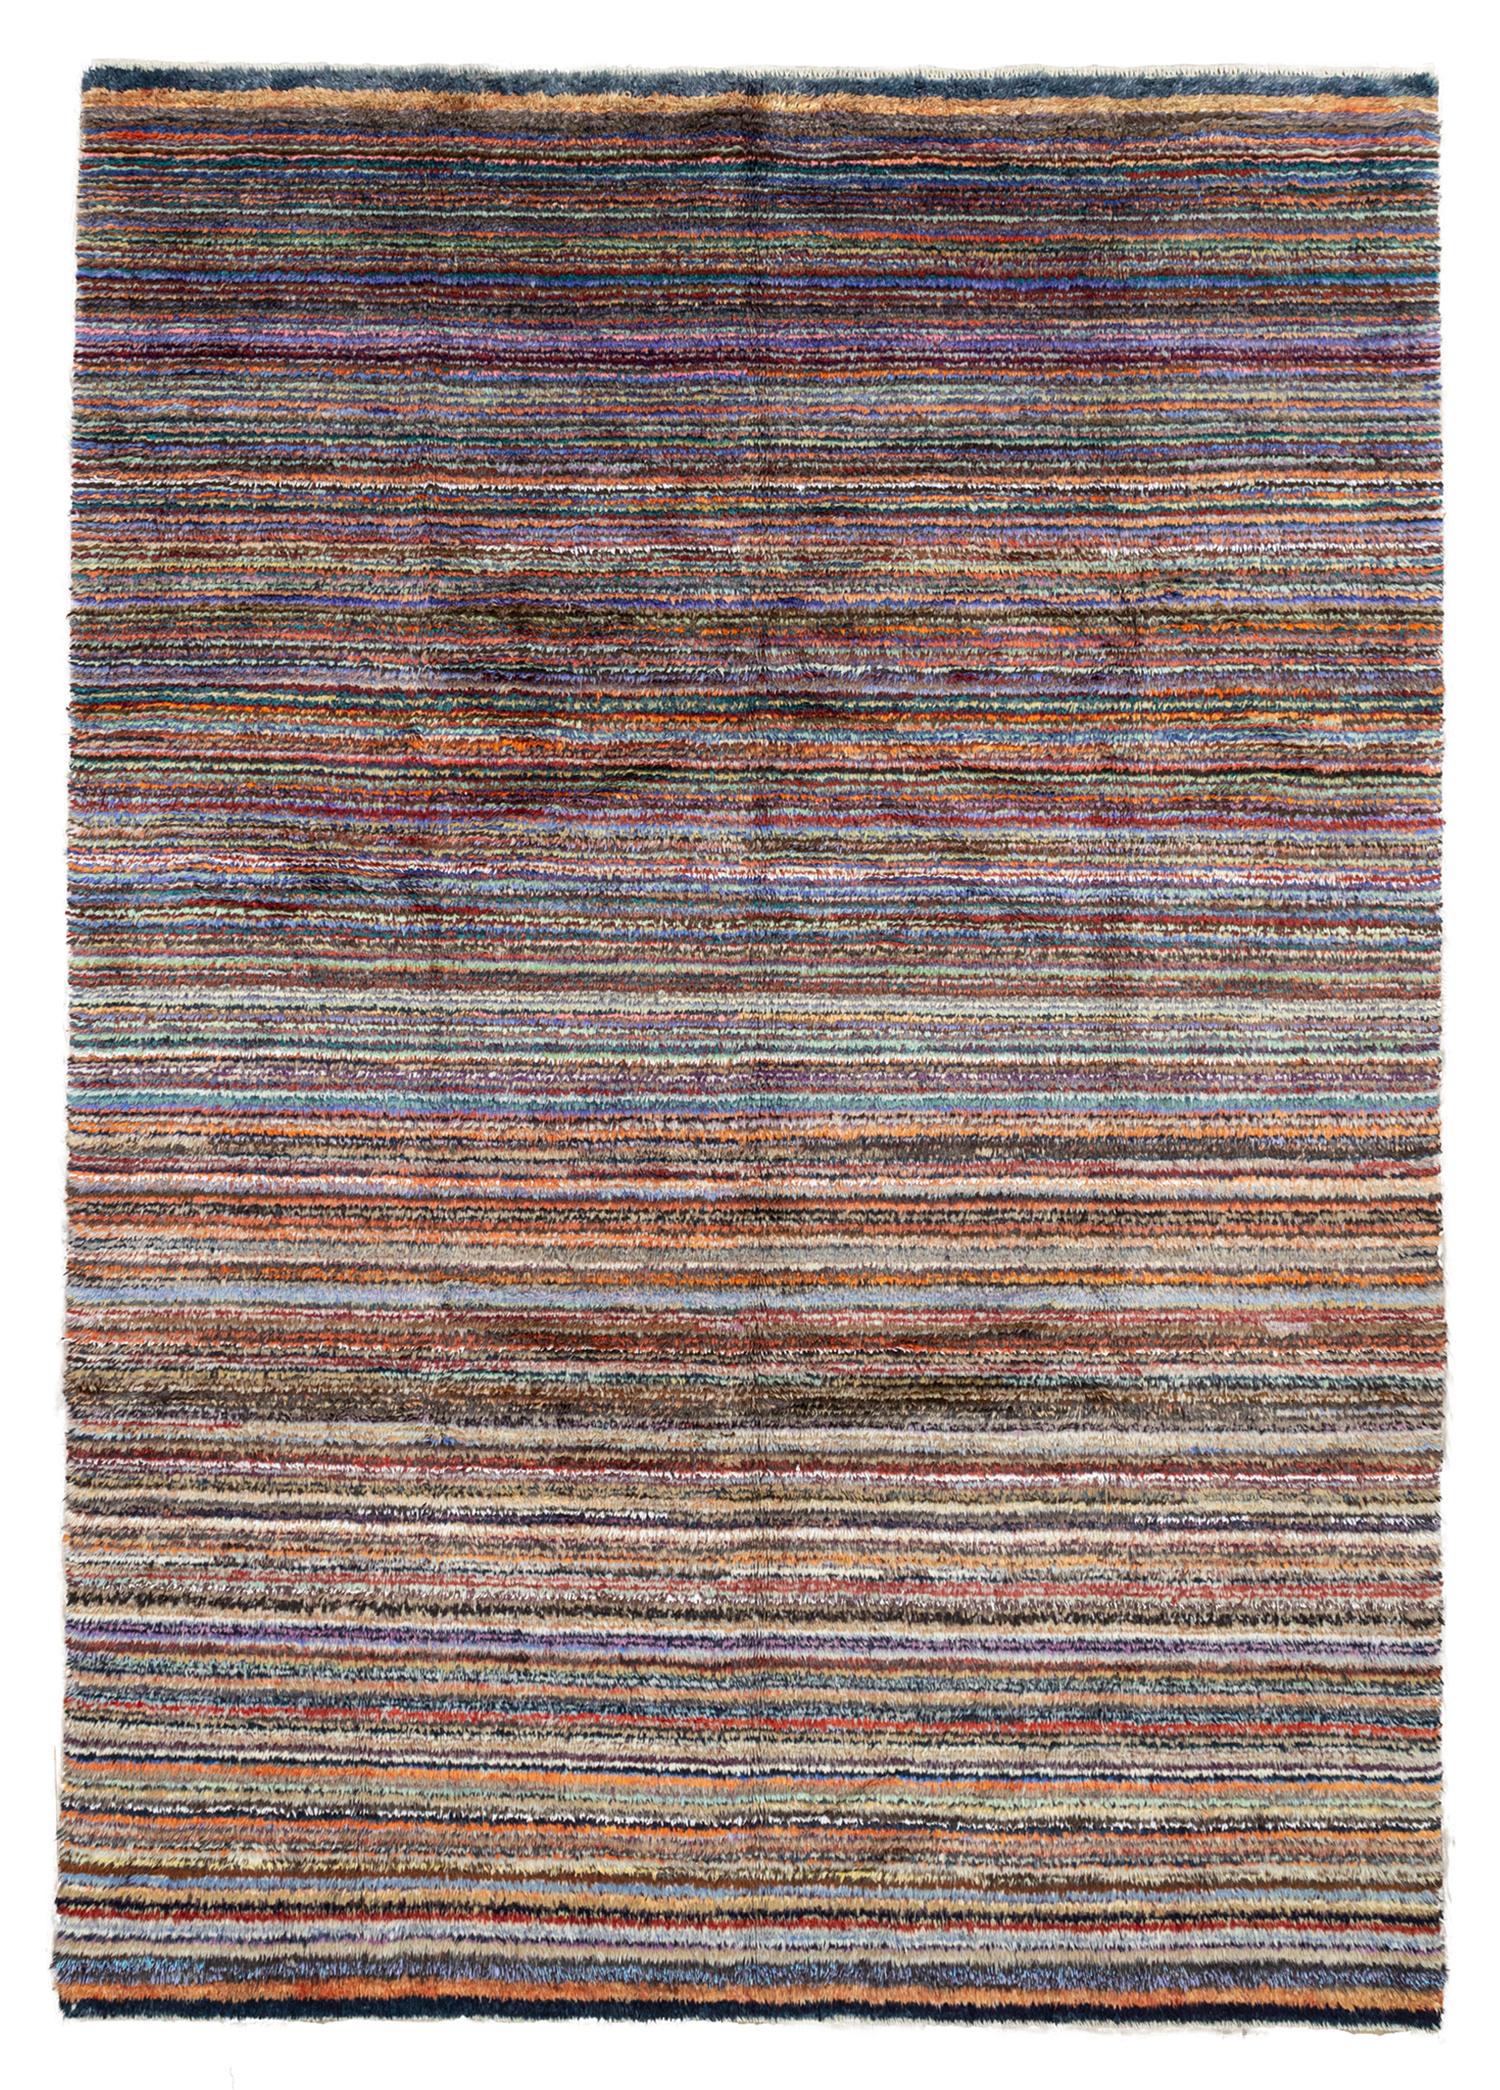 Tiznit Hand-Woven Bohemian Colorful Wool Rug 232x322 cm